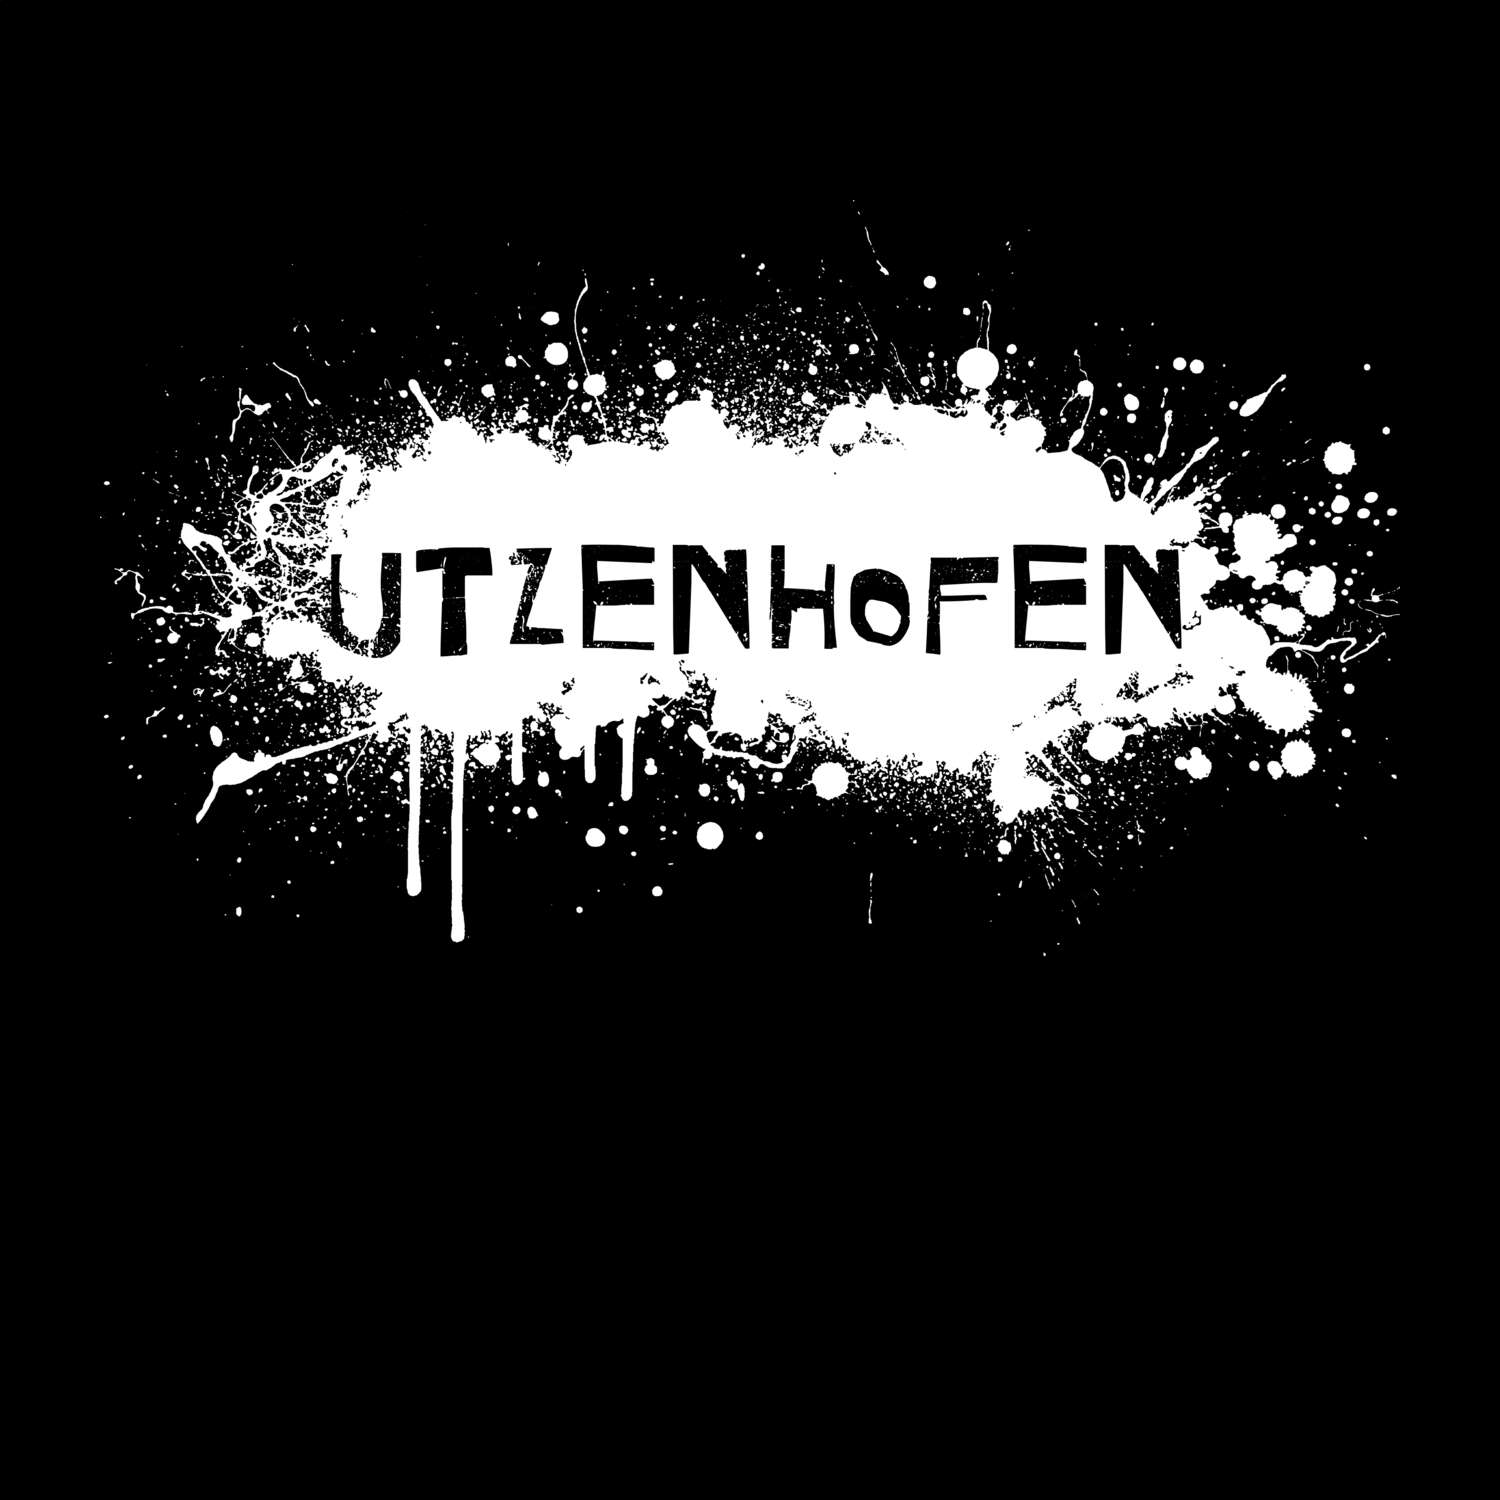 Utzenhofen T-Shirt »Paint Splash Punk«